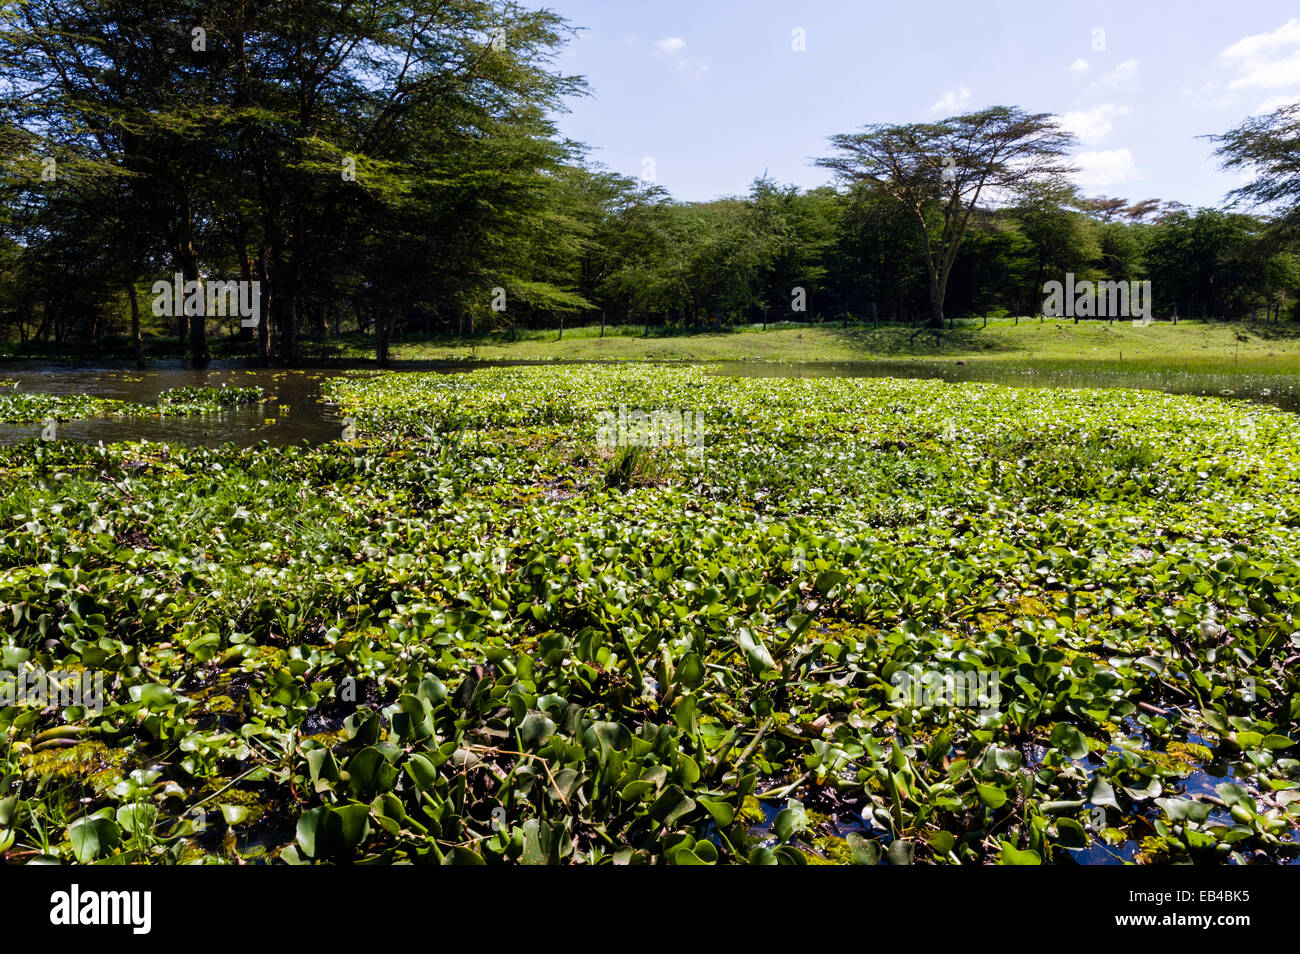 A dense mat of invasive water hyacinth choking the surface of a freshwater lake. Stock Photo